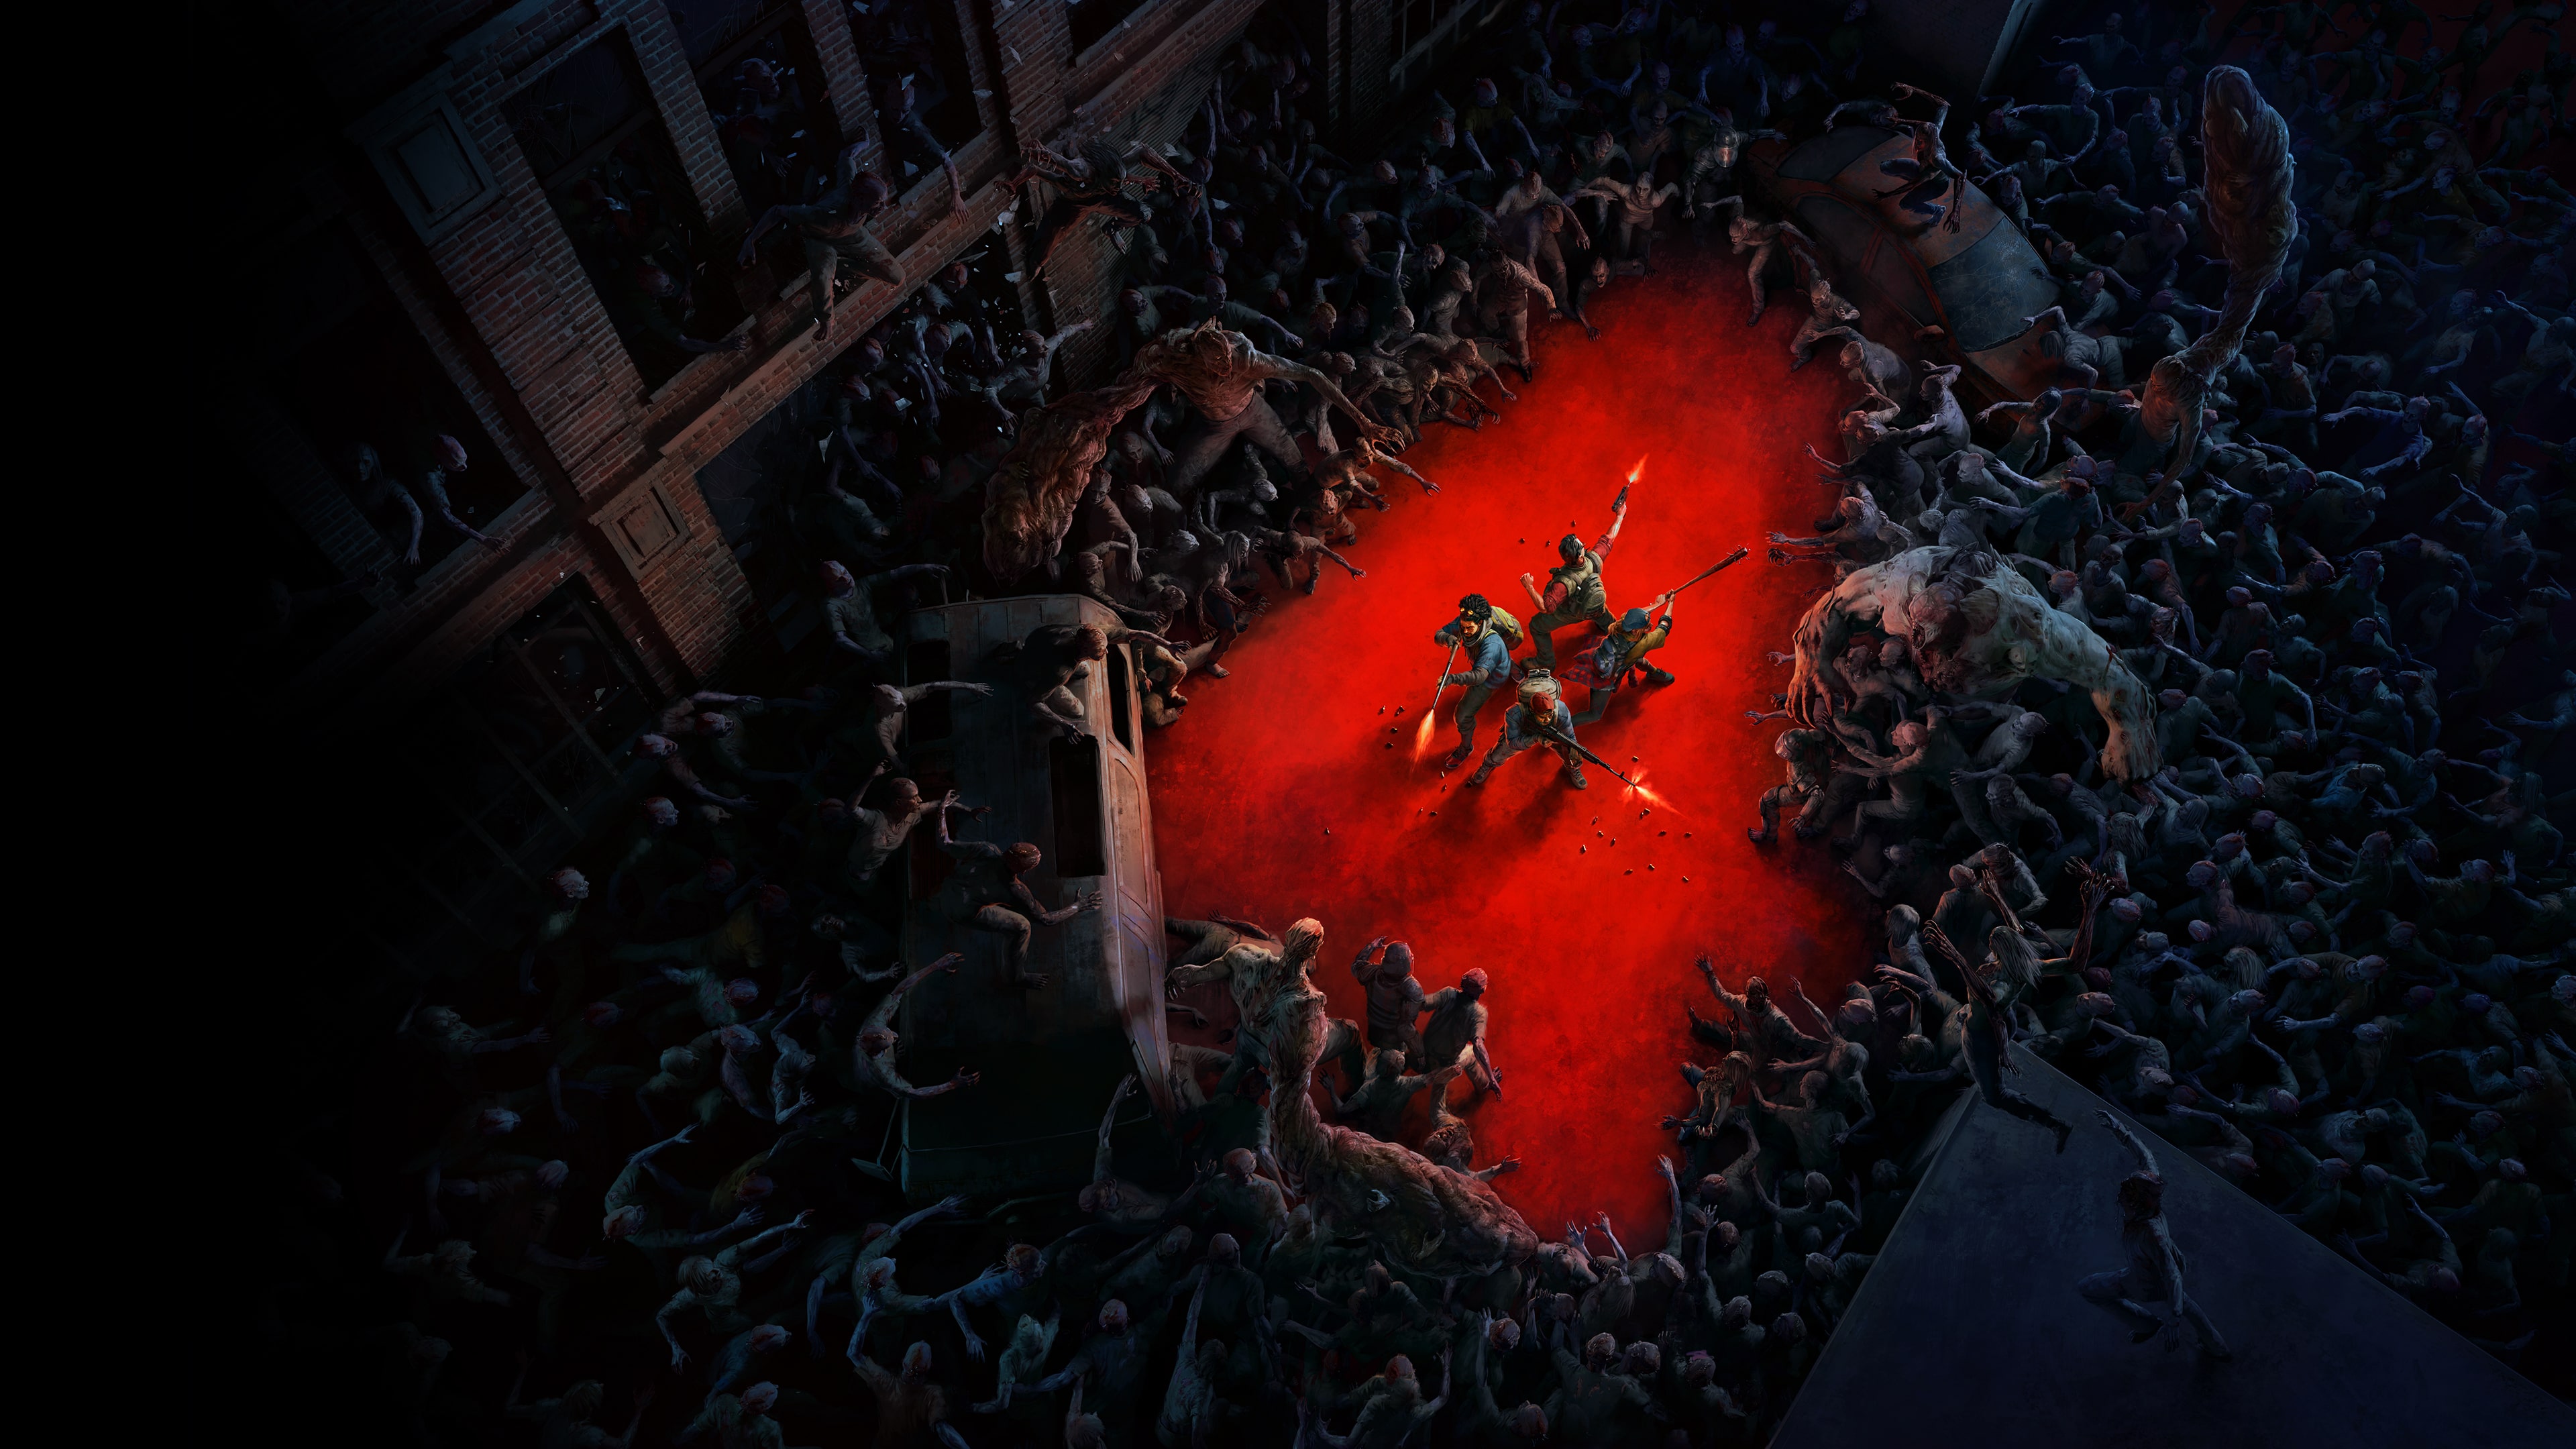 Back 4 Blood: Edycja Standardowa PS4 & PS5